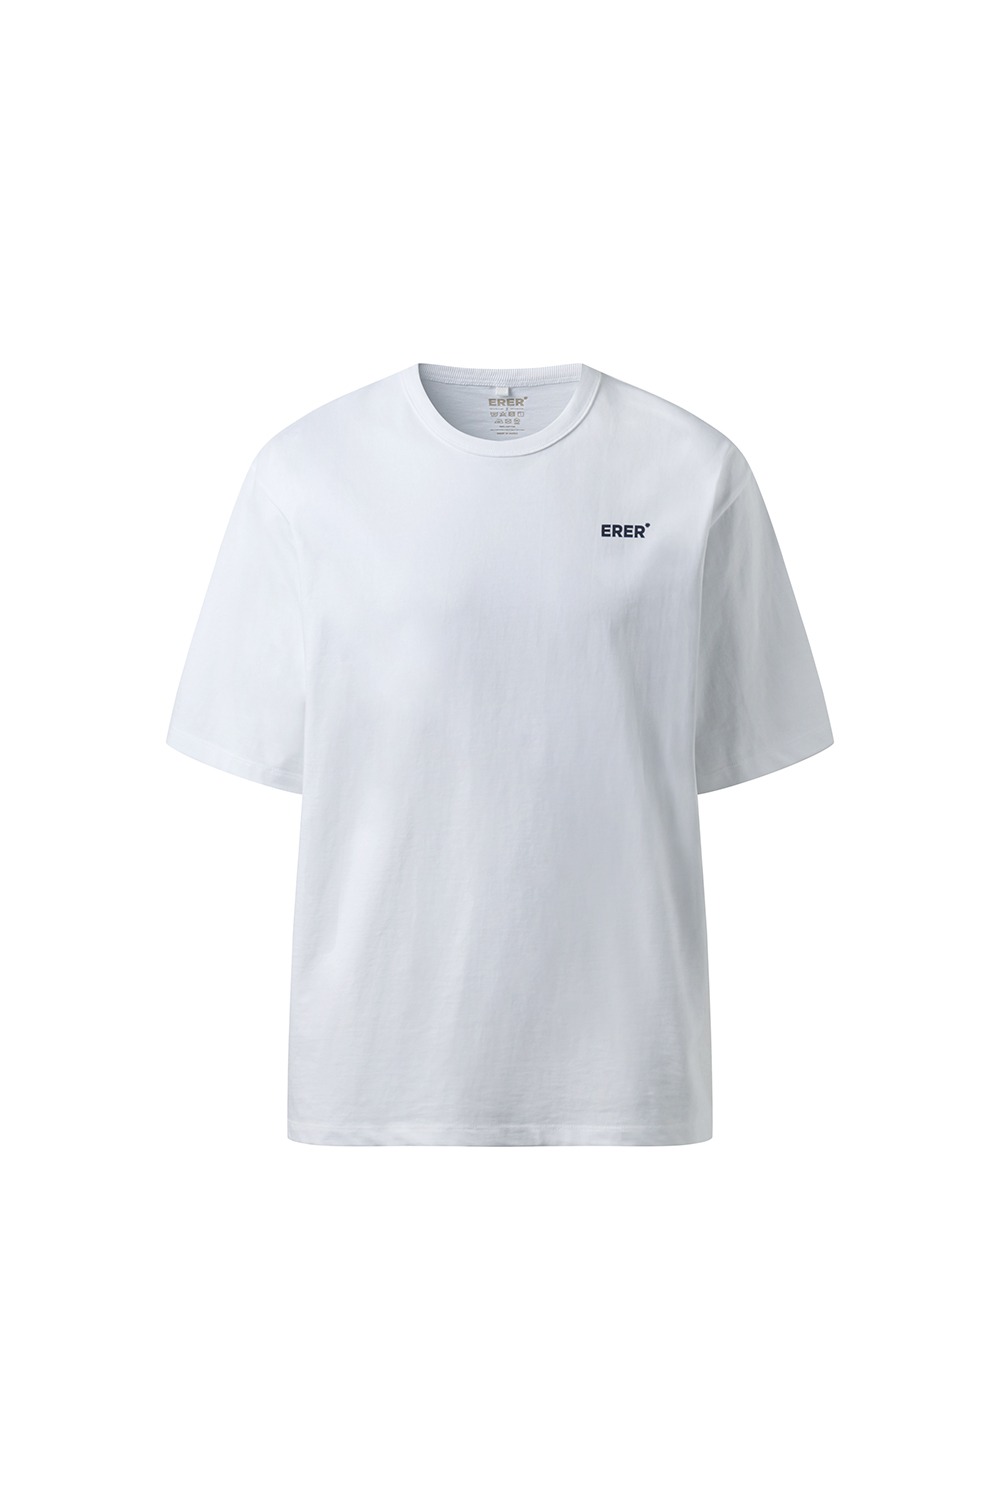 [UN] Basic logo t-shirt - White